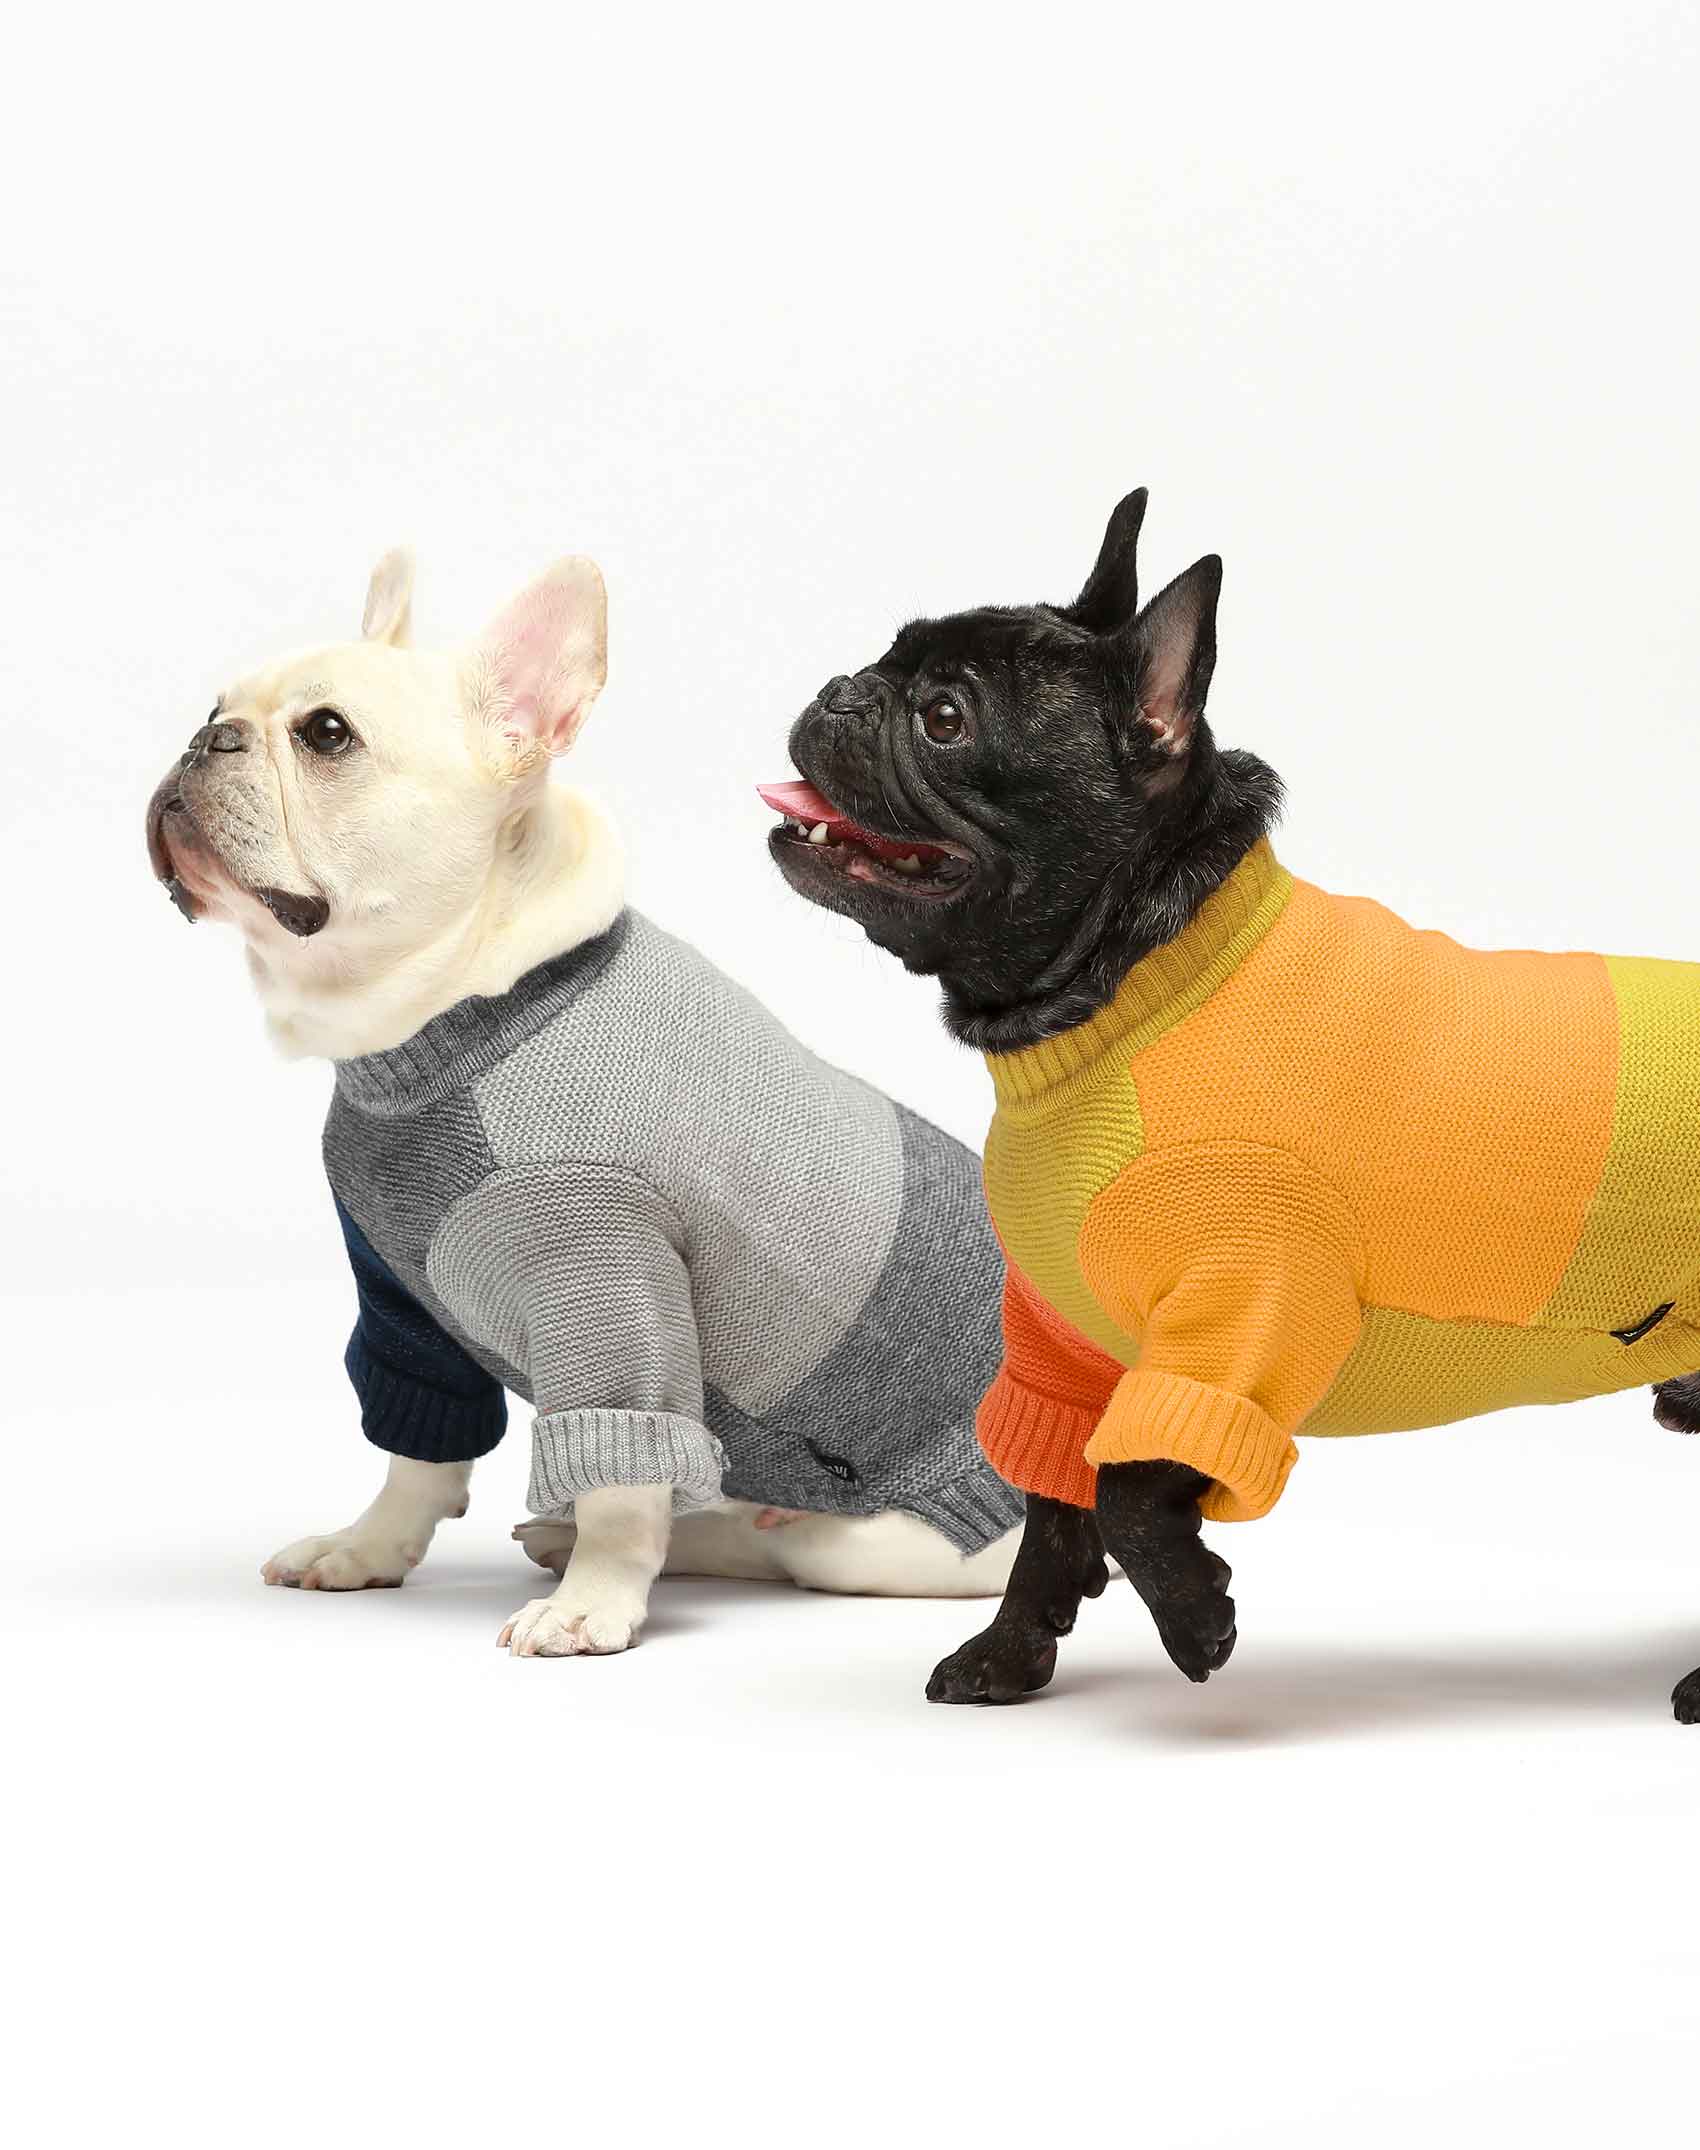 Dog Sweater, Pack of 2 or 3, Dog Clothes, Dog Coat, Dog Jacket for